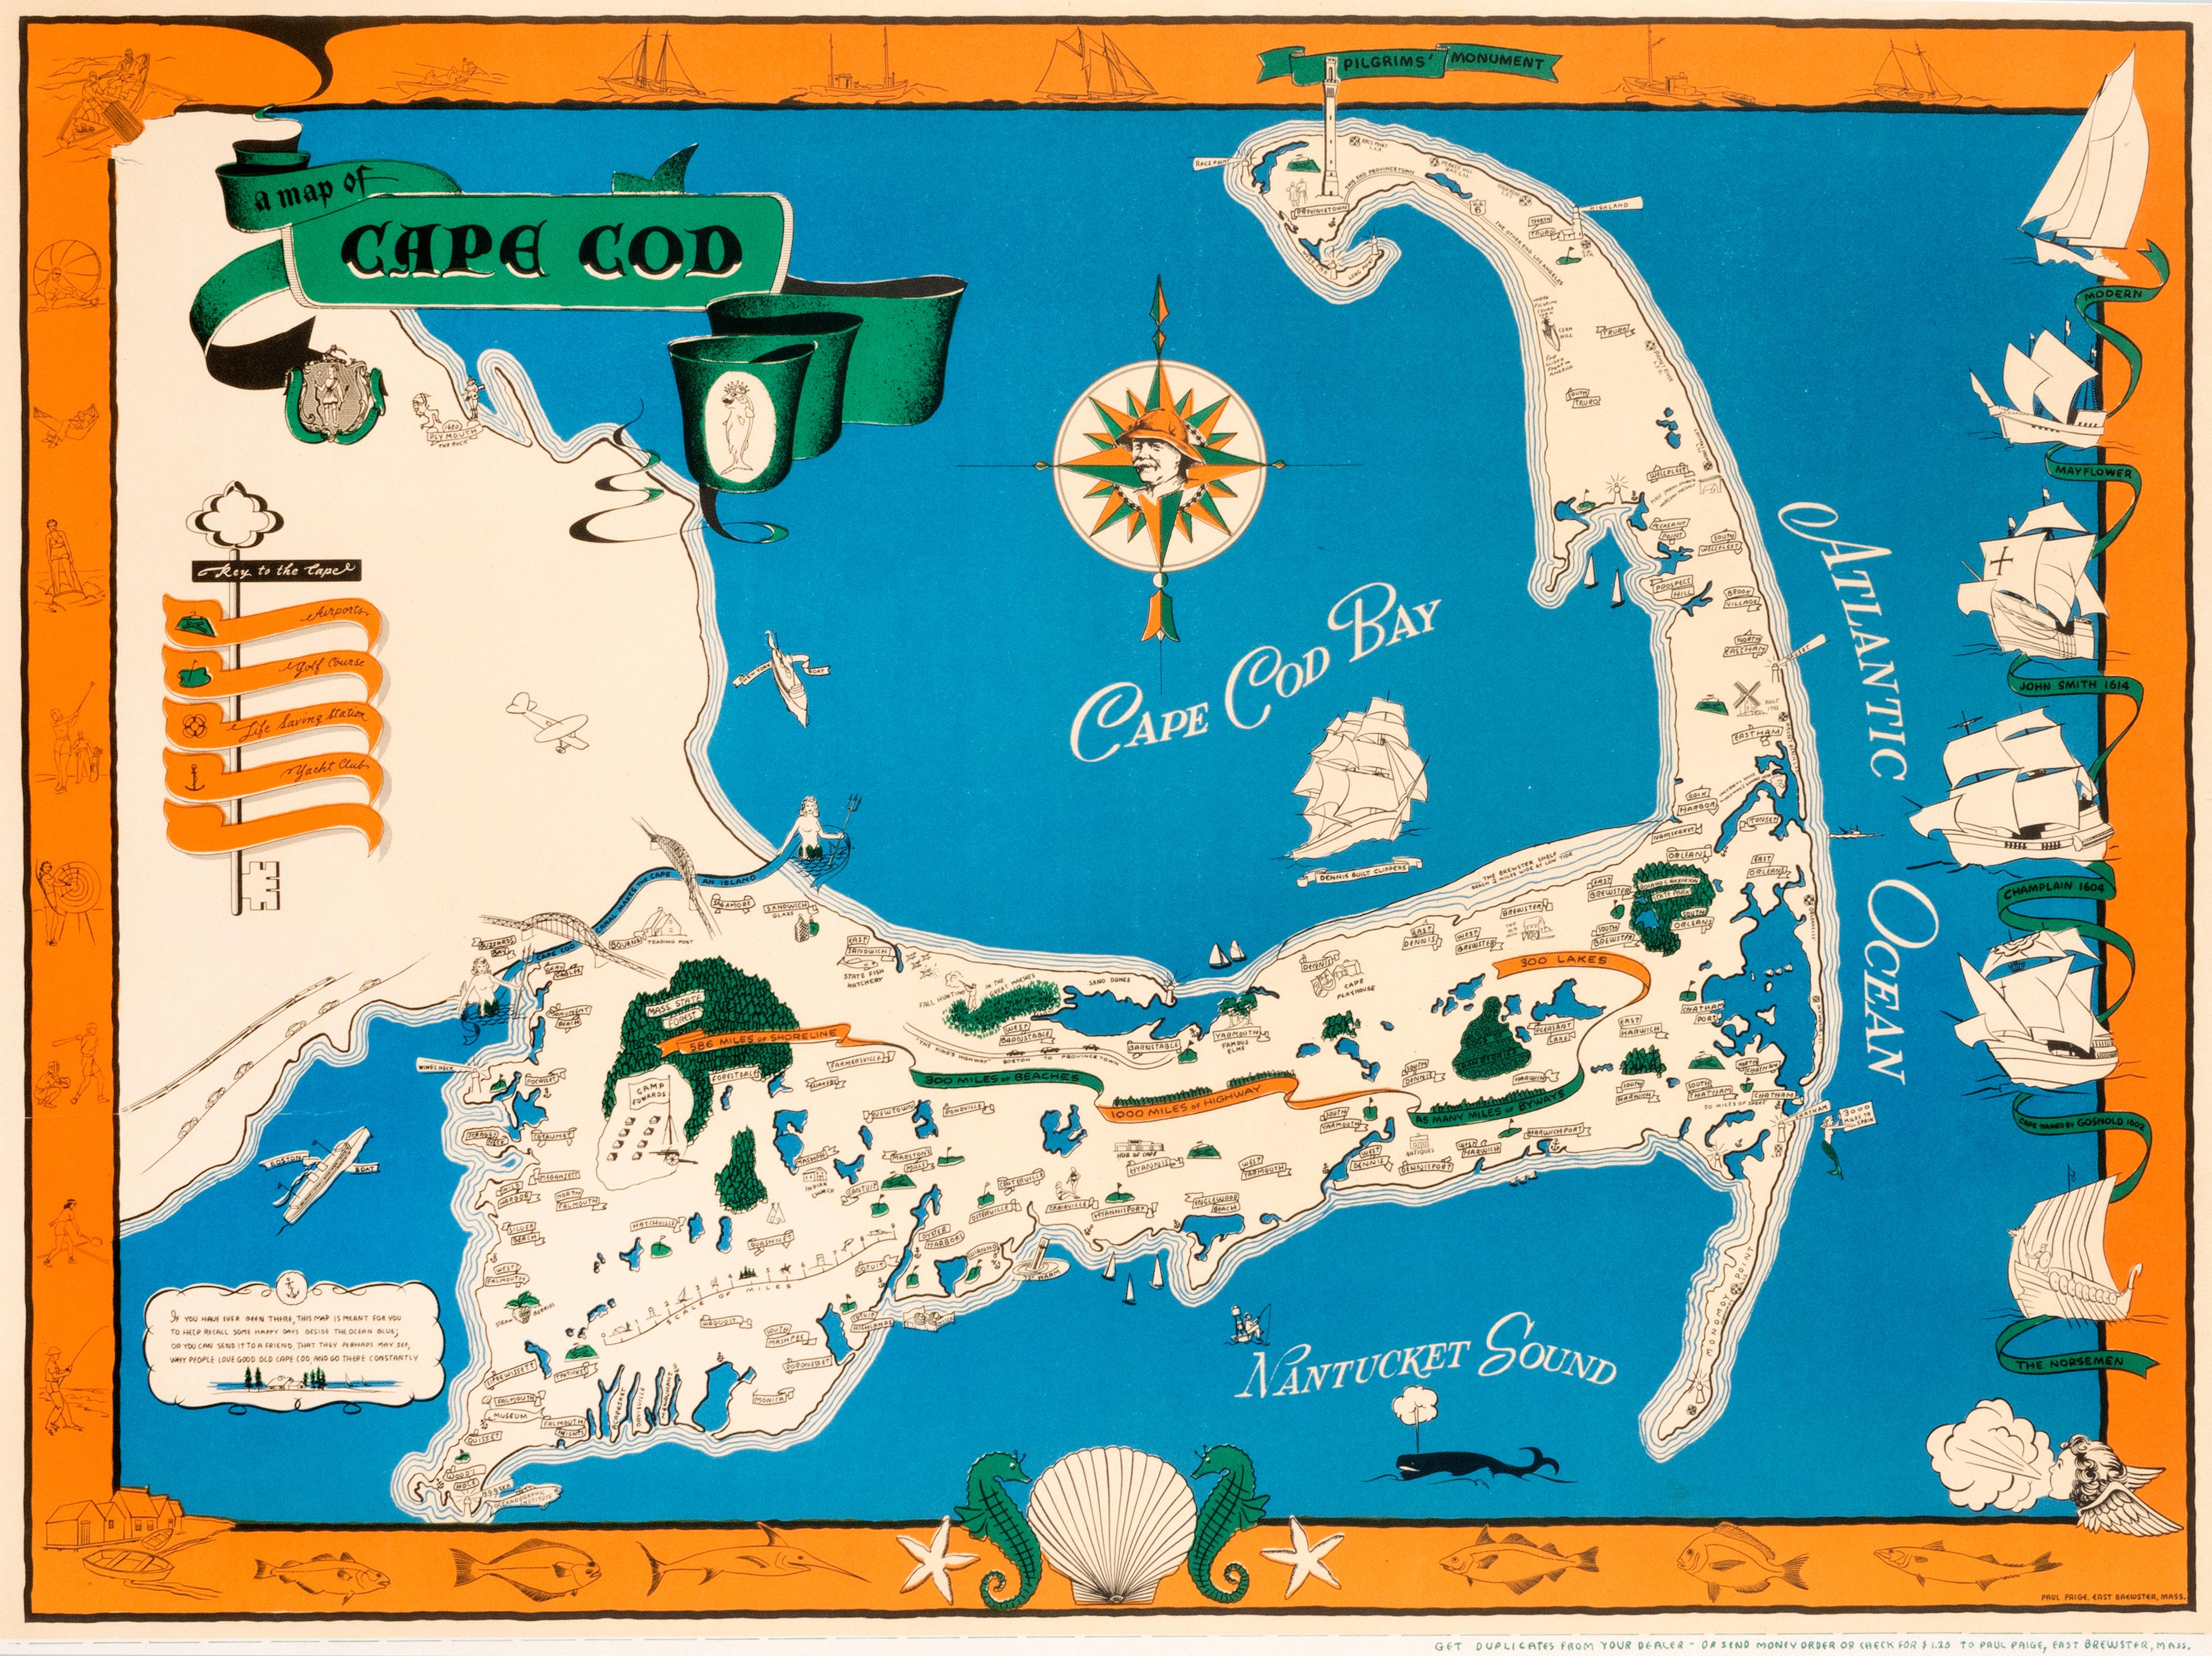 Paul Paige Landscape Print - Illustrated Map of Cape Cod - 1930s Original Vintage Poster Massachusetts Coast